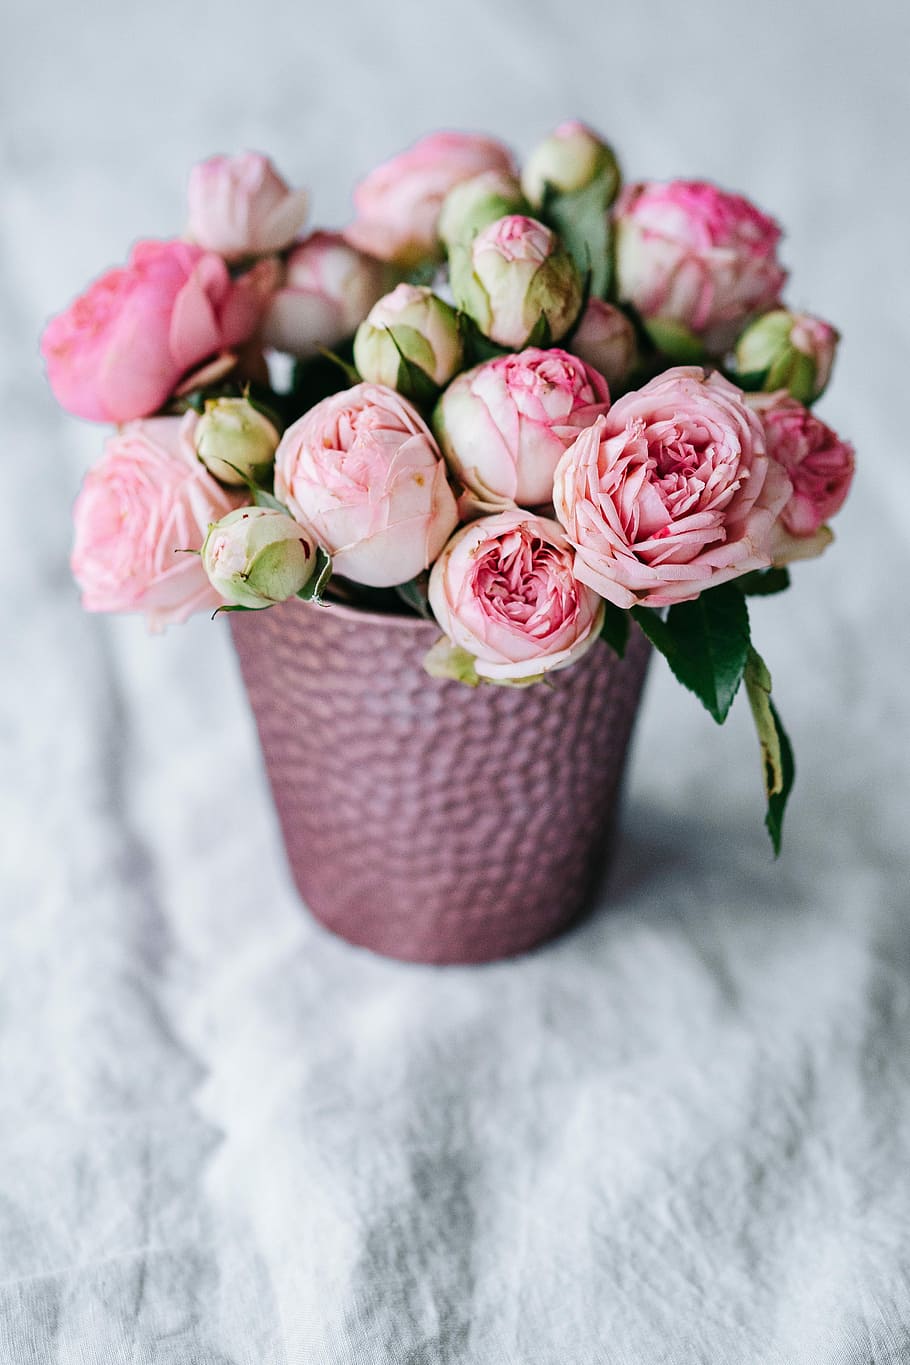 mawar, pot, Merah Muda, bunga, flora, bunga-bunga indah, karangan bunga, Warna pink, alam, kesegaran